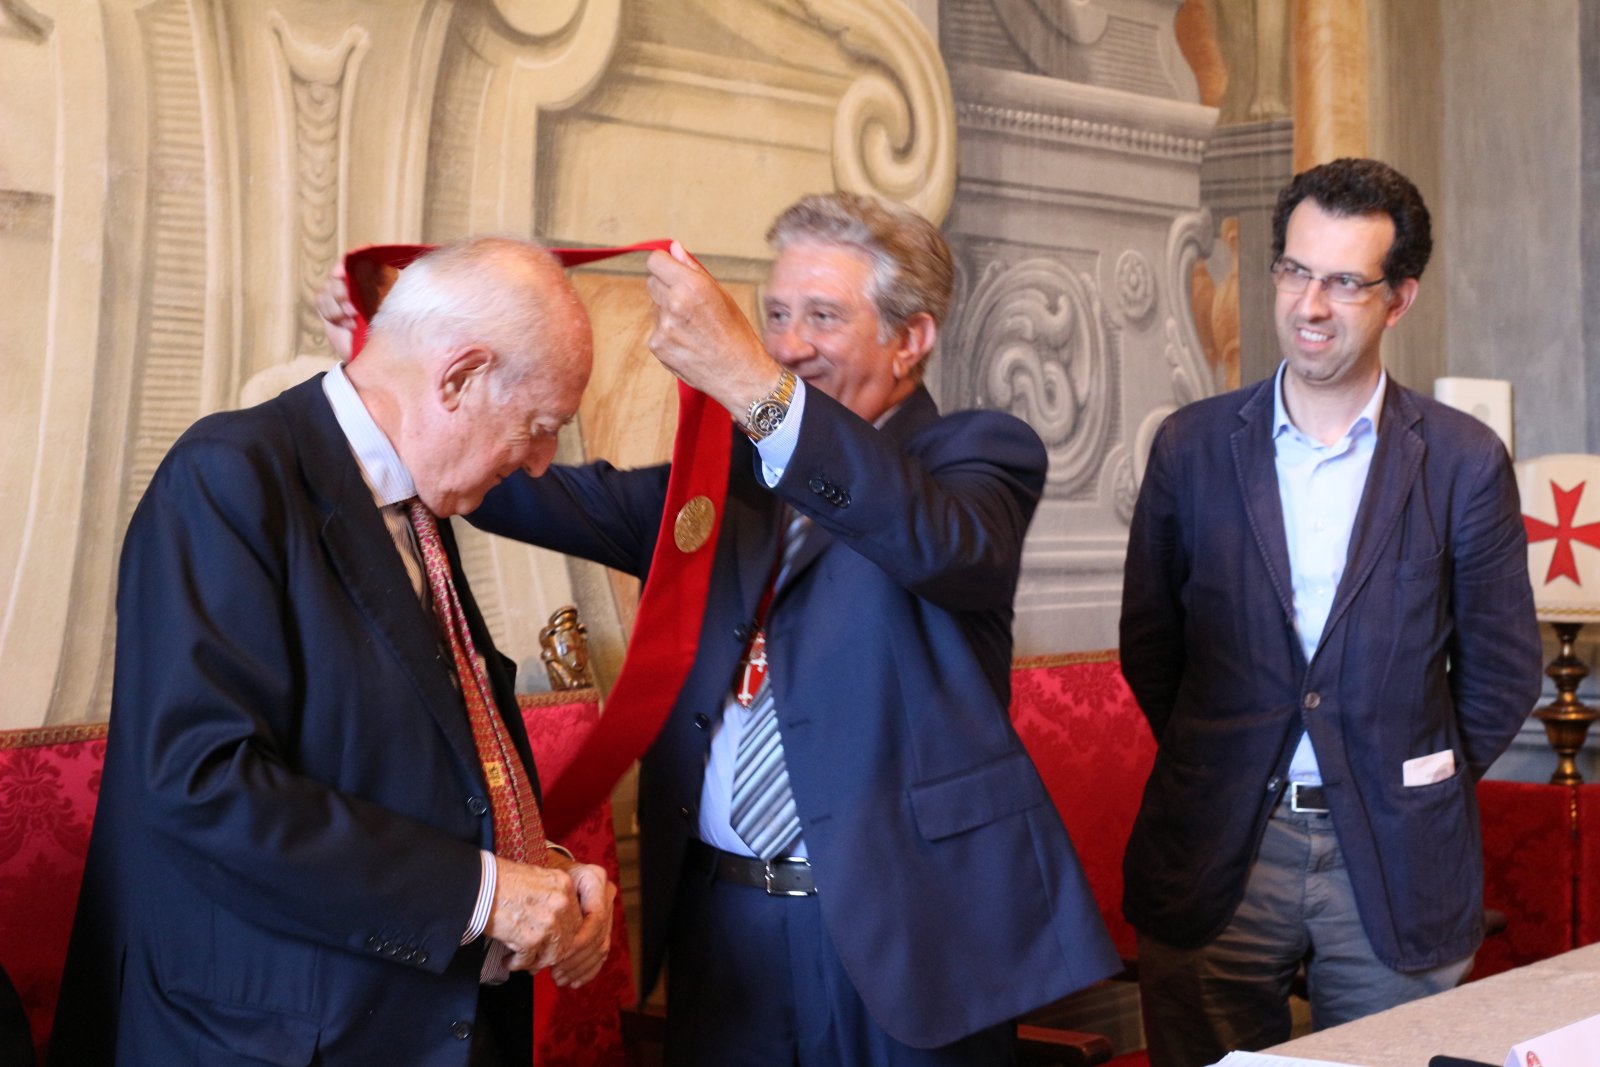 Adalberto Giazotto receives the honour from the Accademia dei Disuniti in Pisa